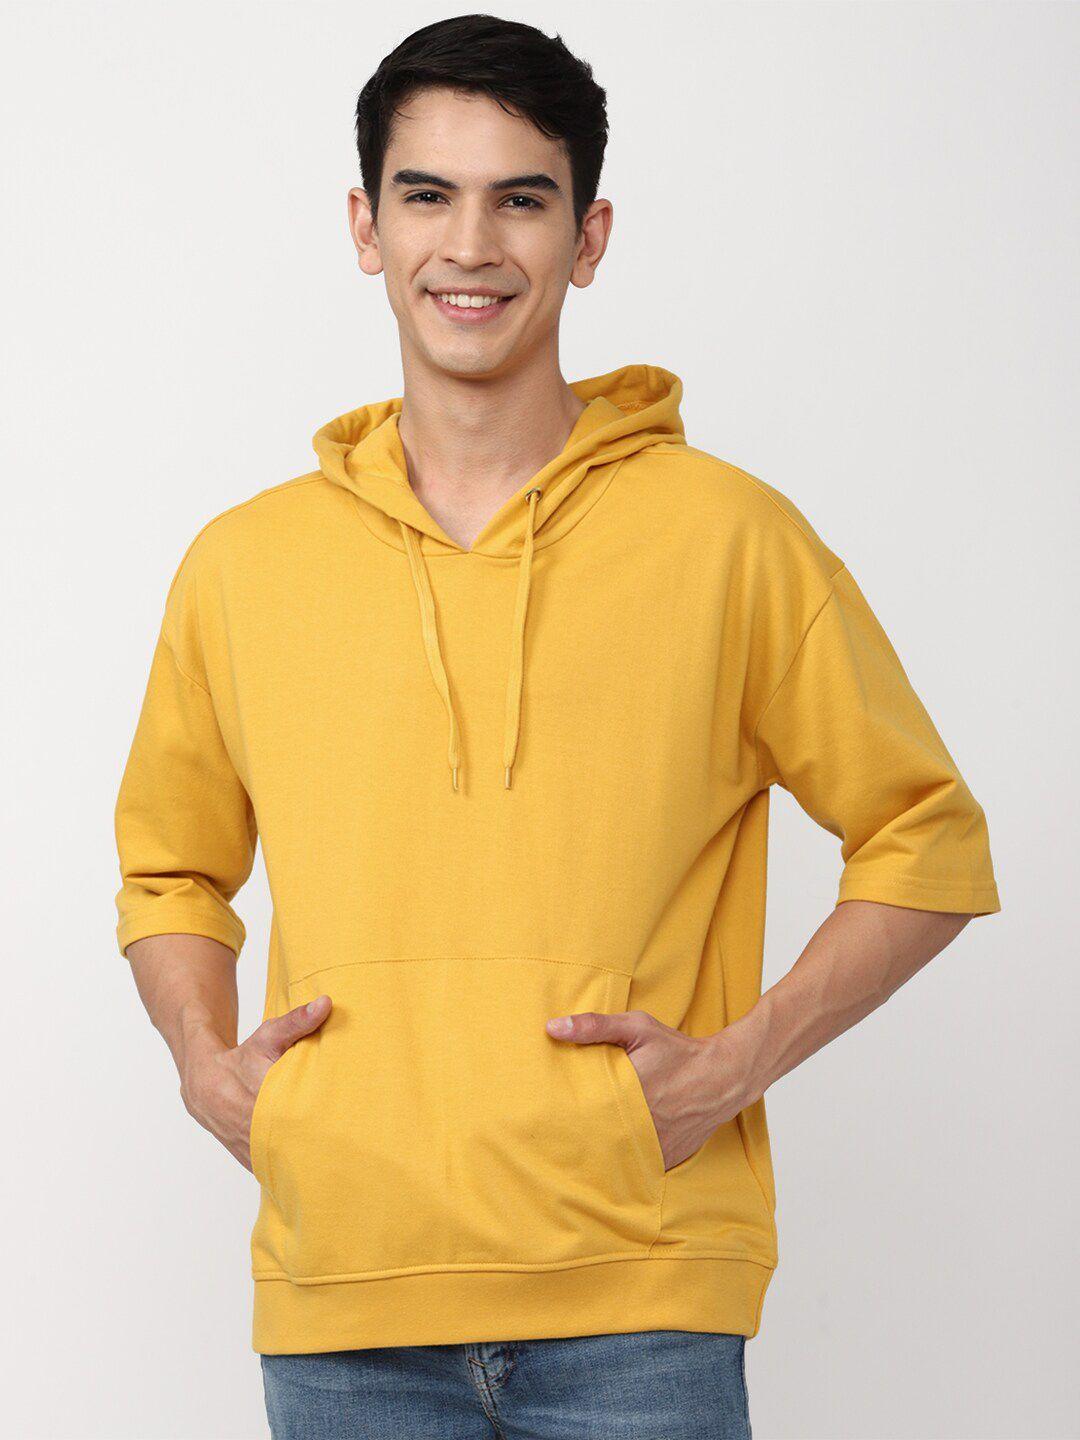 forever-21-men-yellow-hooded-sweatshirt